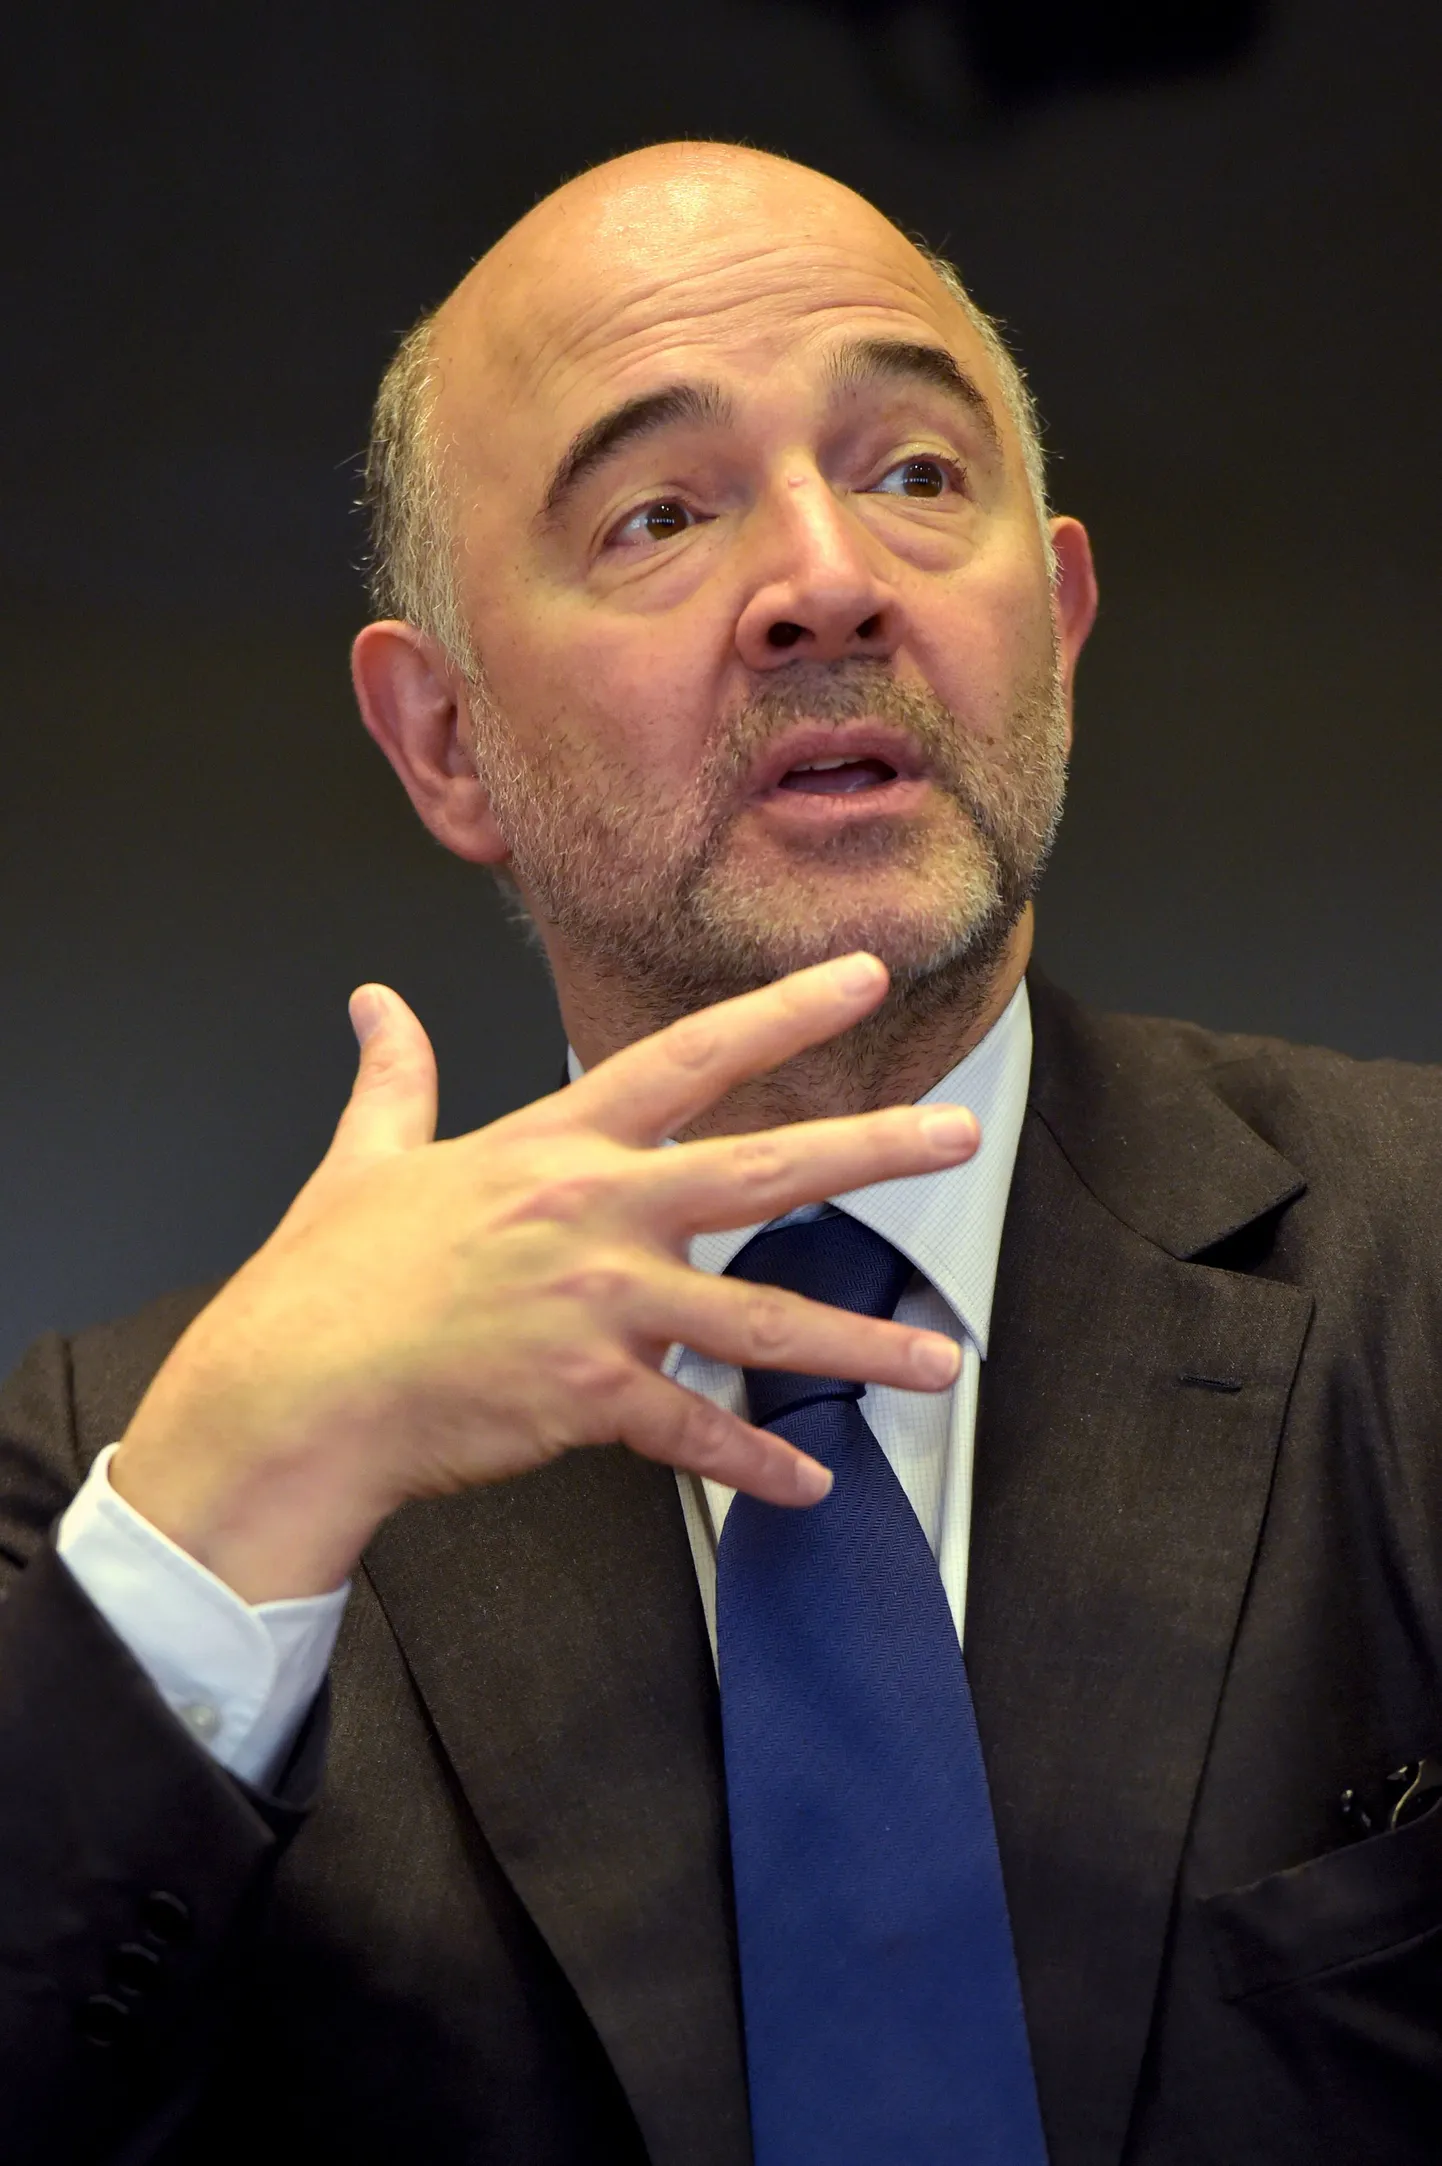 Pierre Moscovici